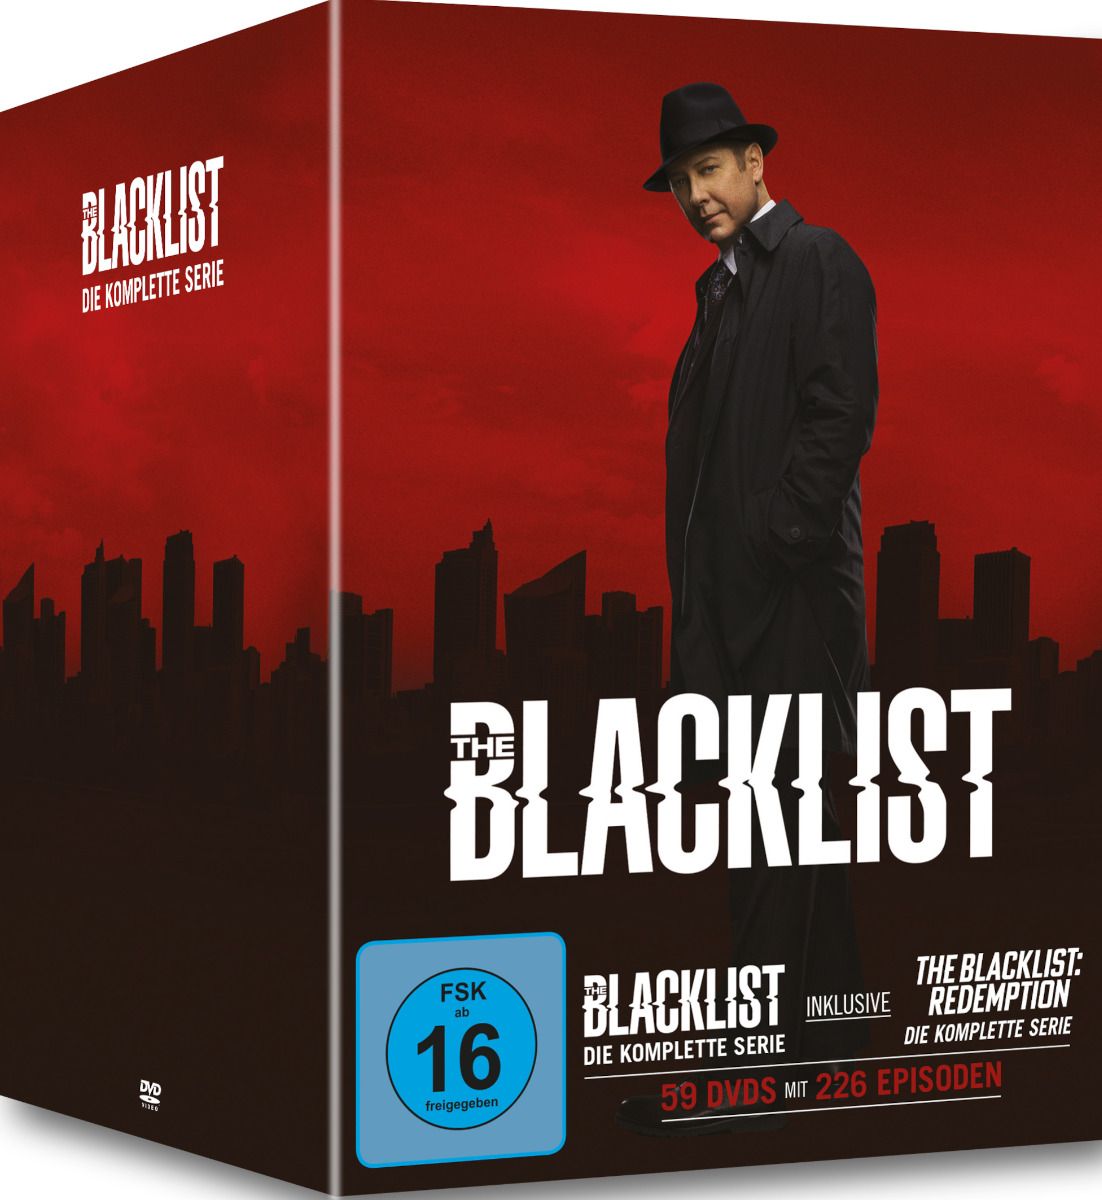 The Blacklist - Die komplette Serie (59 DVDs) - inkl. The Blacklist: Redemption